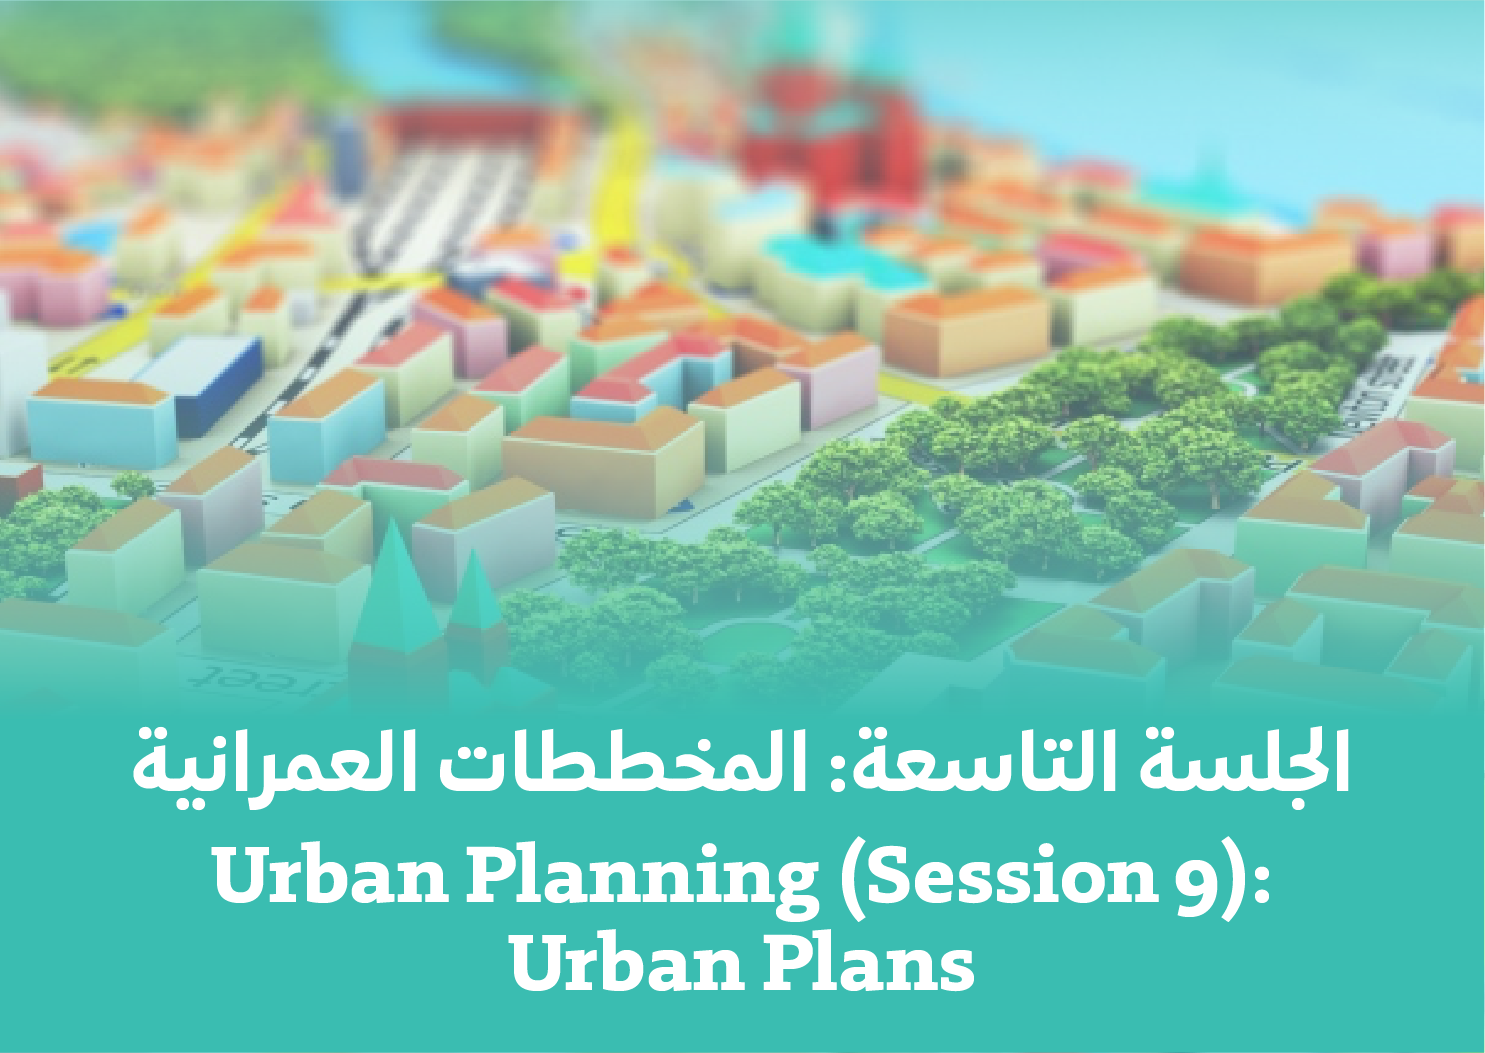 Session 9: Urban Plans